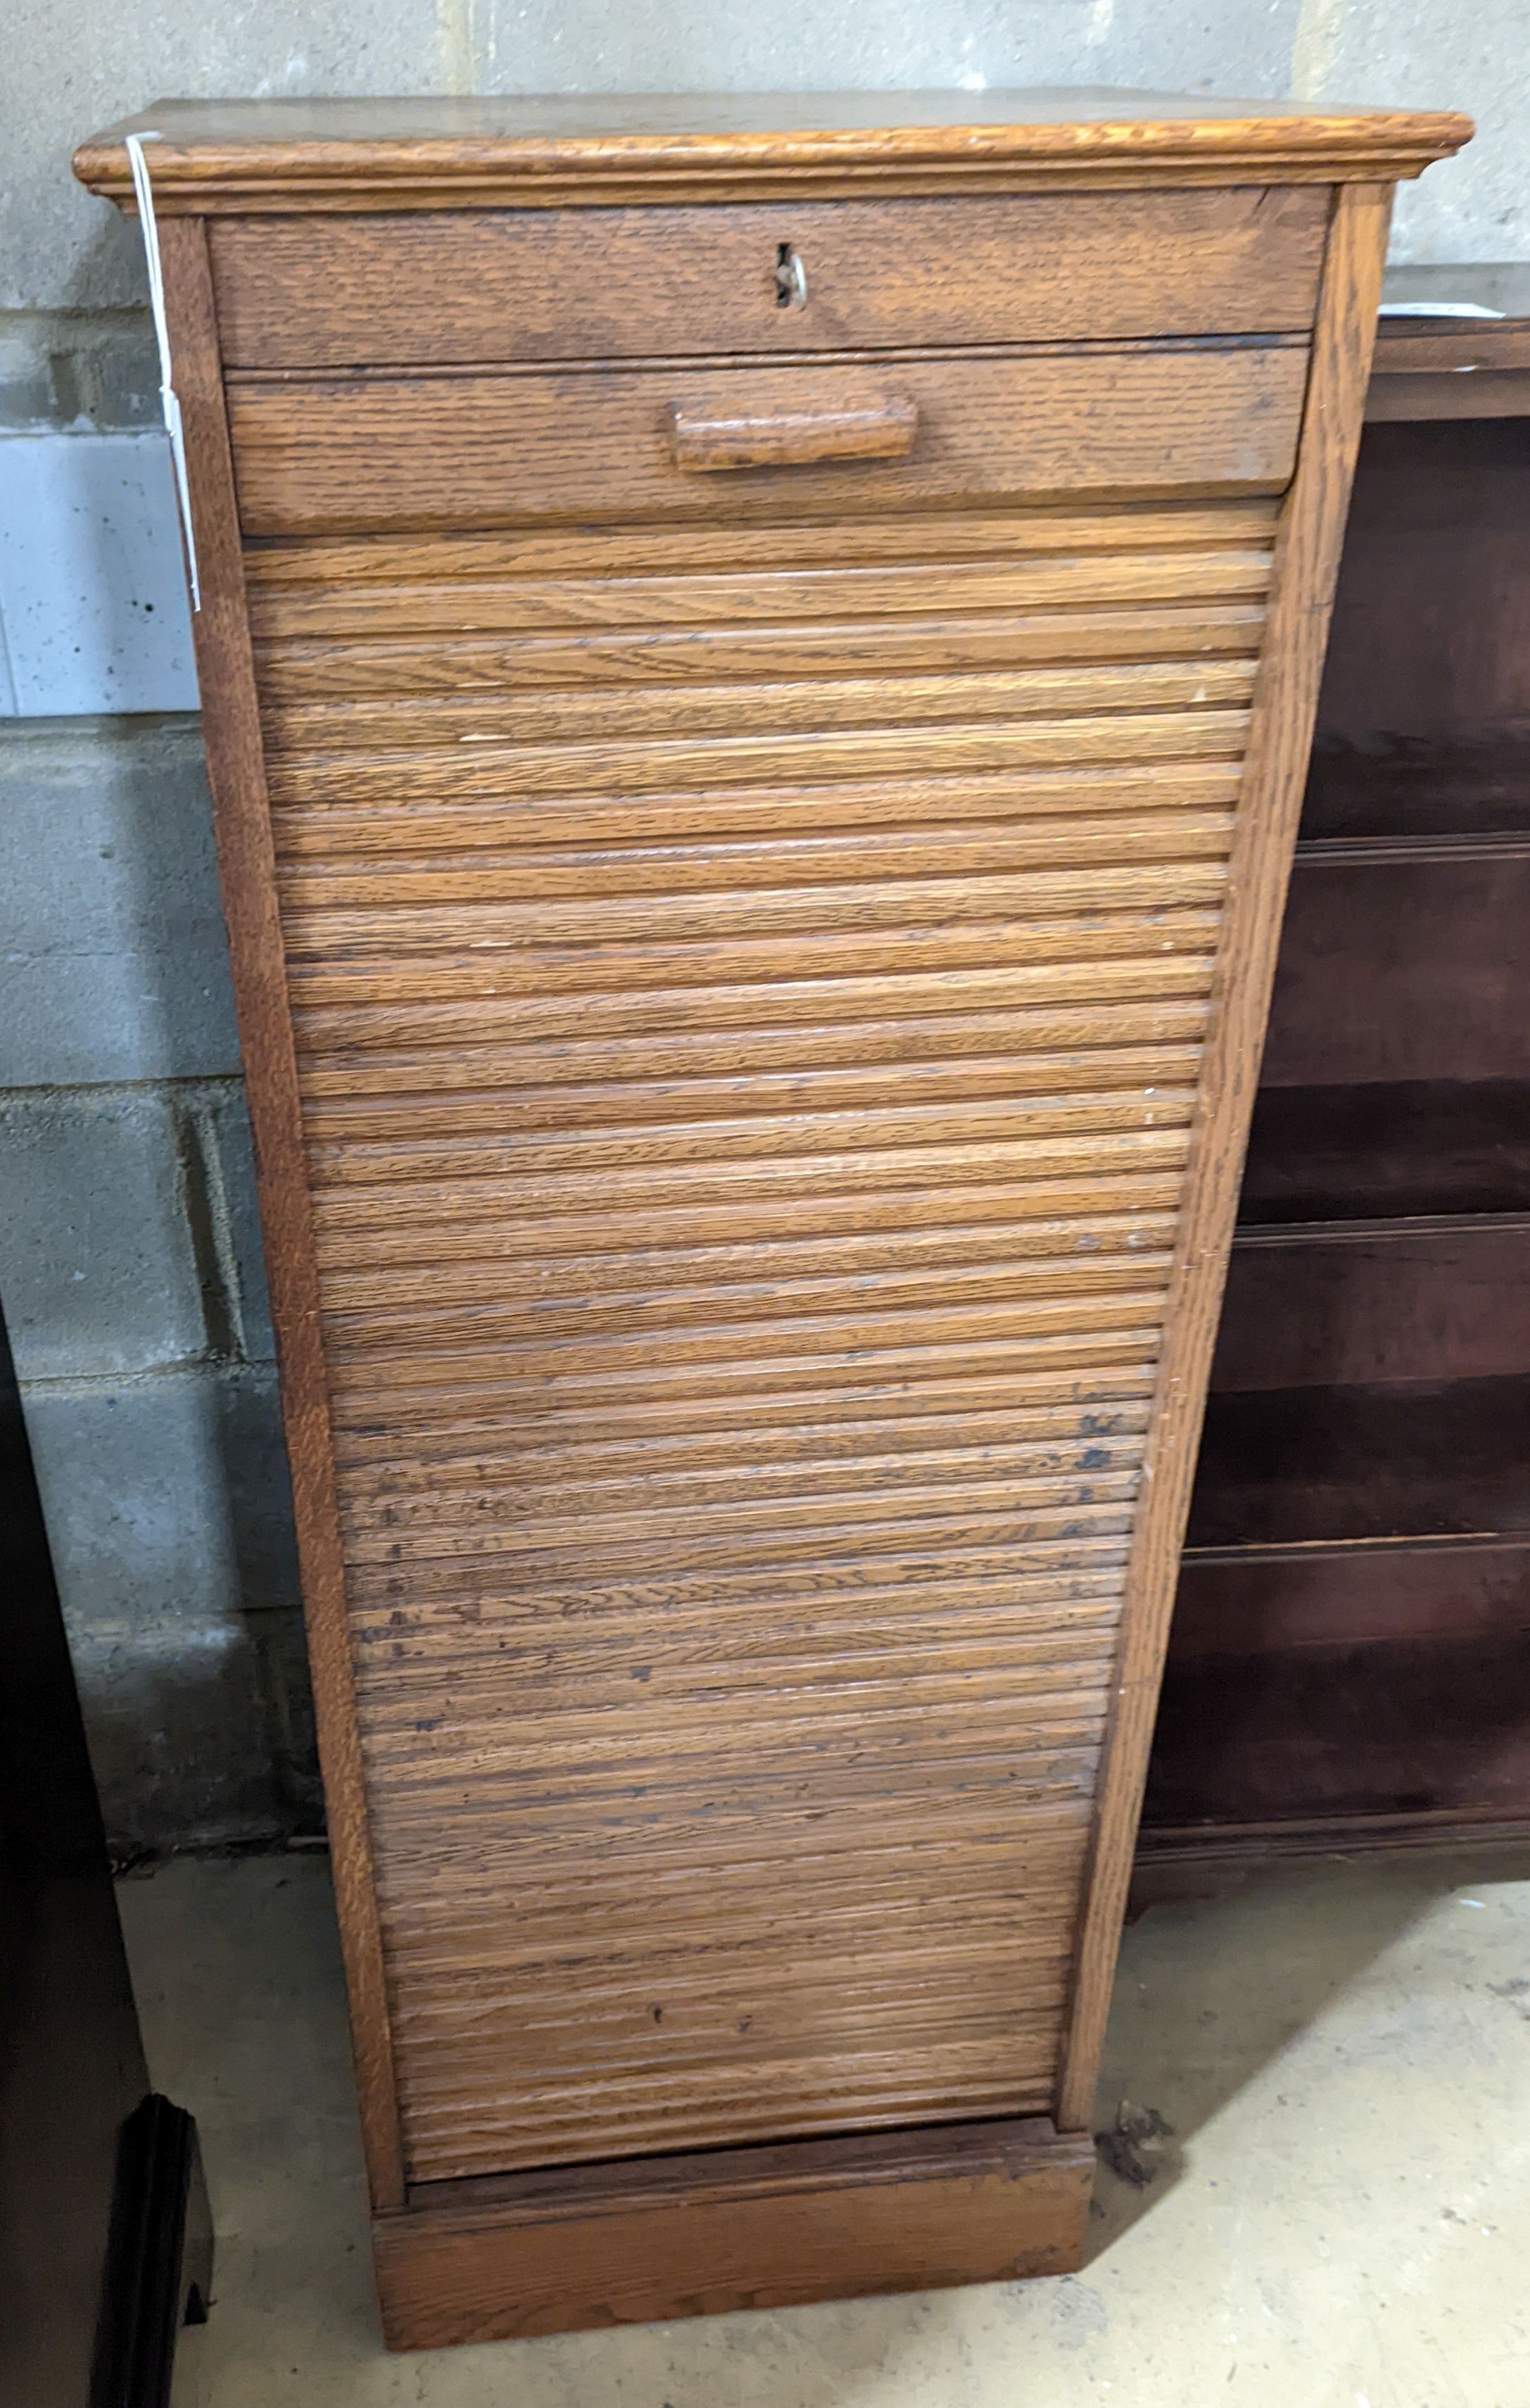 An early 20th century oak tambour filing cabinet, width 49cm, depth 40cm, height 125cm